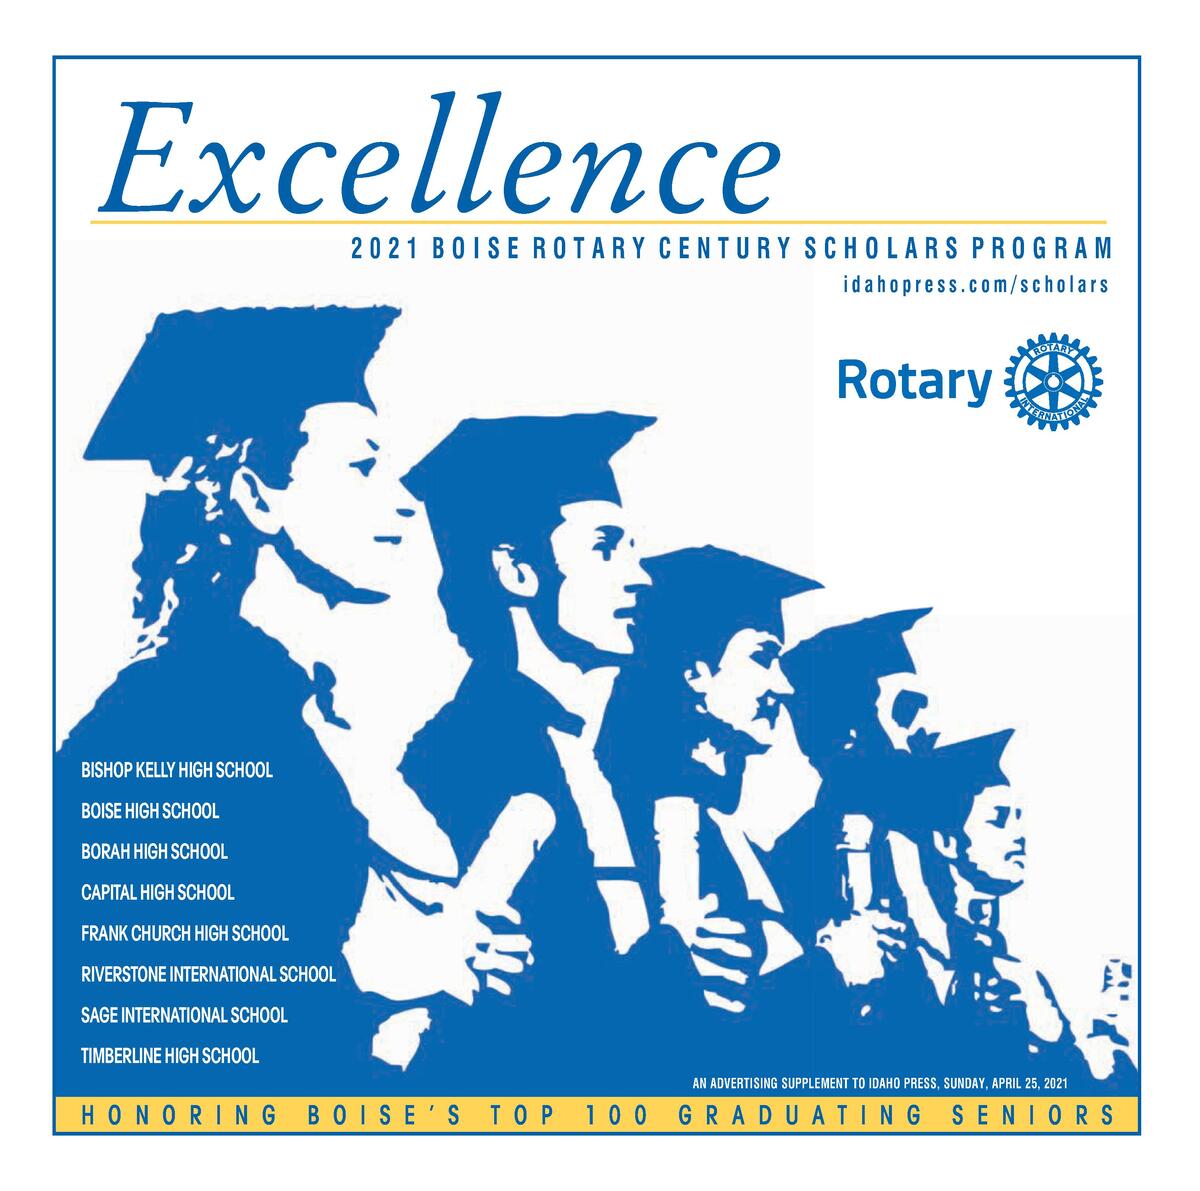 2021 Boise Rotary Century Scholars image